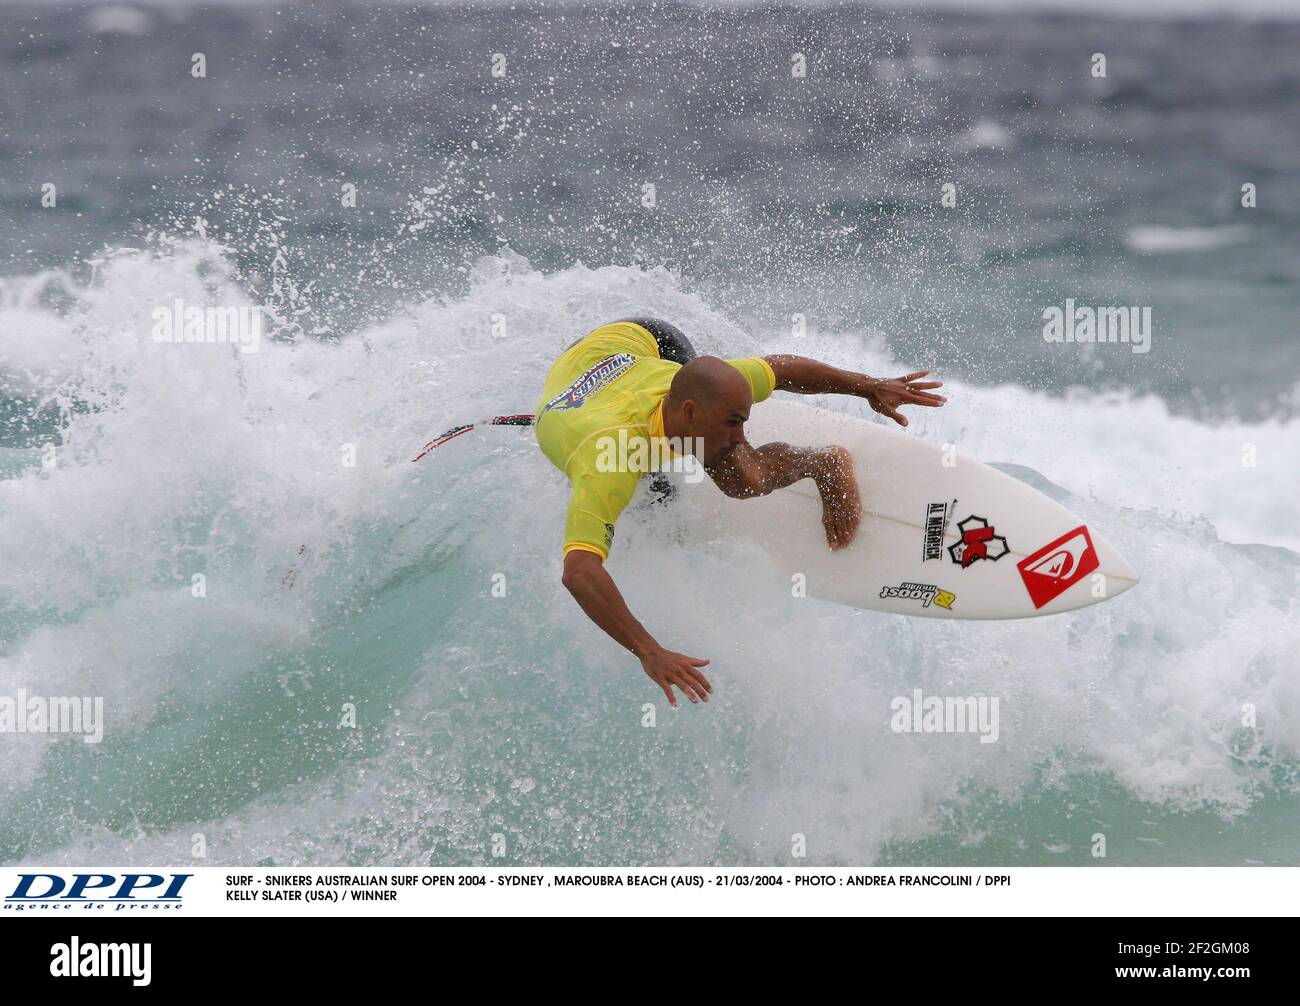 SURF - SNIKERS SURF AUSTRALIEN OUVERT 2004 - SYDNEY , PLAGE DE MAROUBRA (AUS) - 21/03/2004 - PHOTO : ANDREA FRANCOLINI / DPPI KELLY SLATER (USA) / GAGNANT Banque D'Images